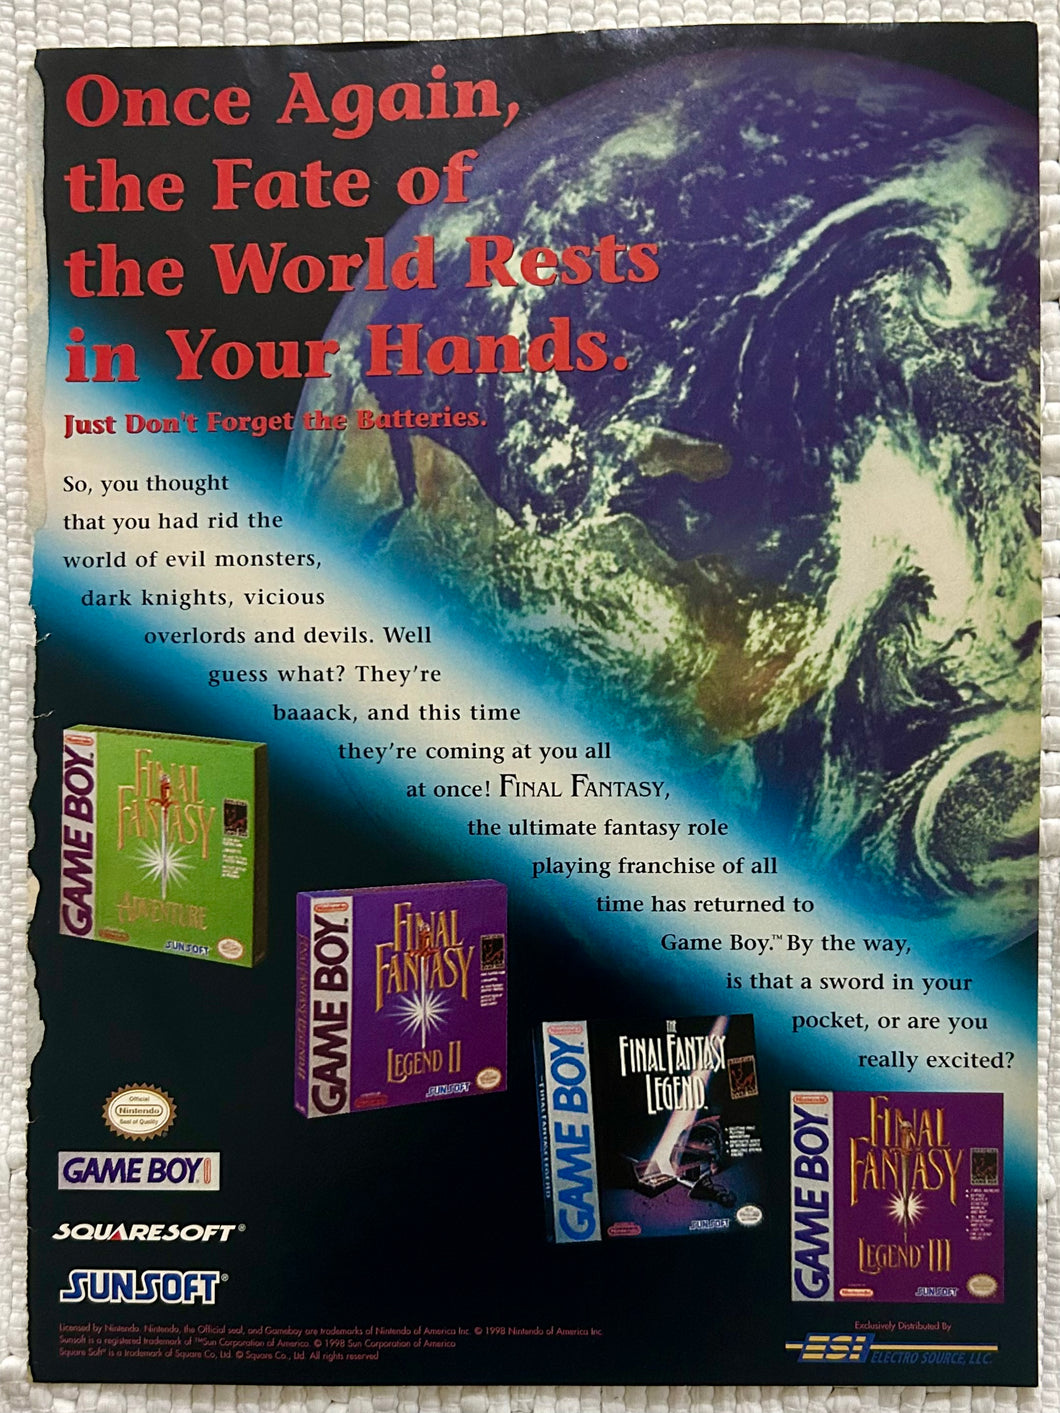 SquareSoft / SunSoft Games - GBC - Original Vintage Advertisement - Print Ads - Laminated A4 Poster